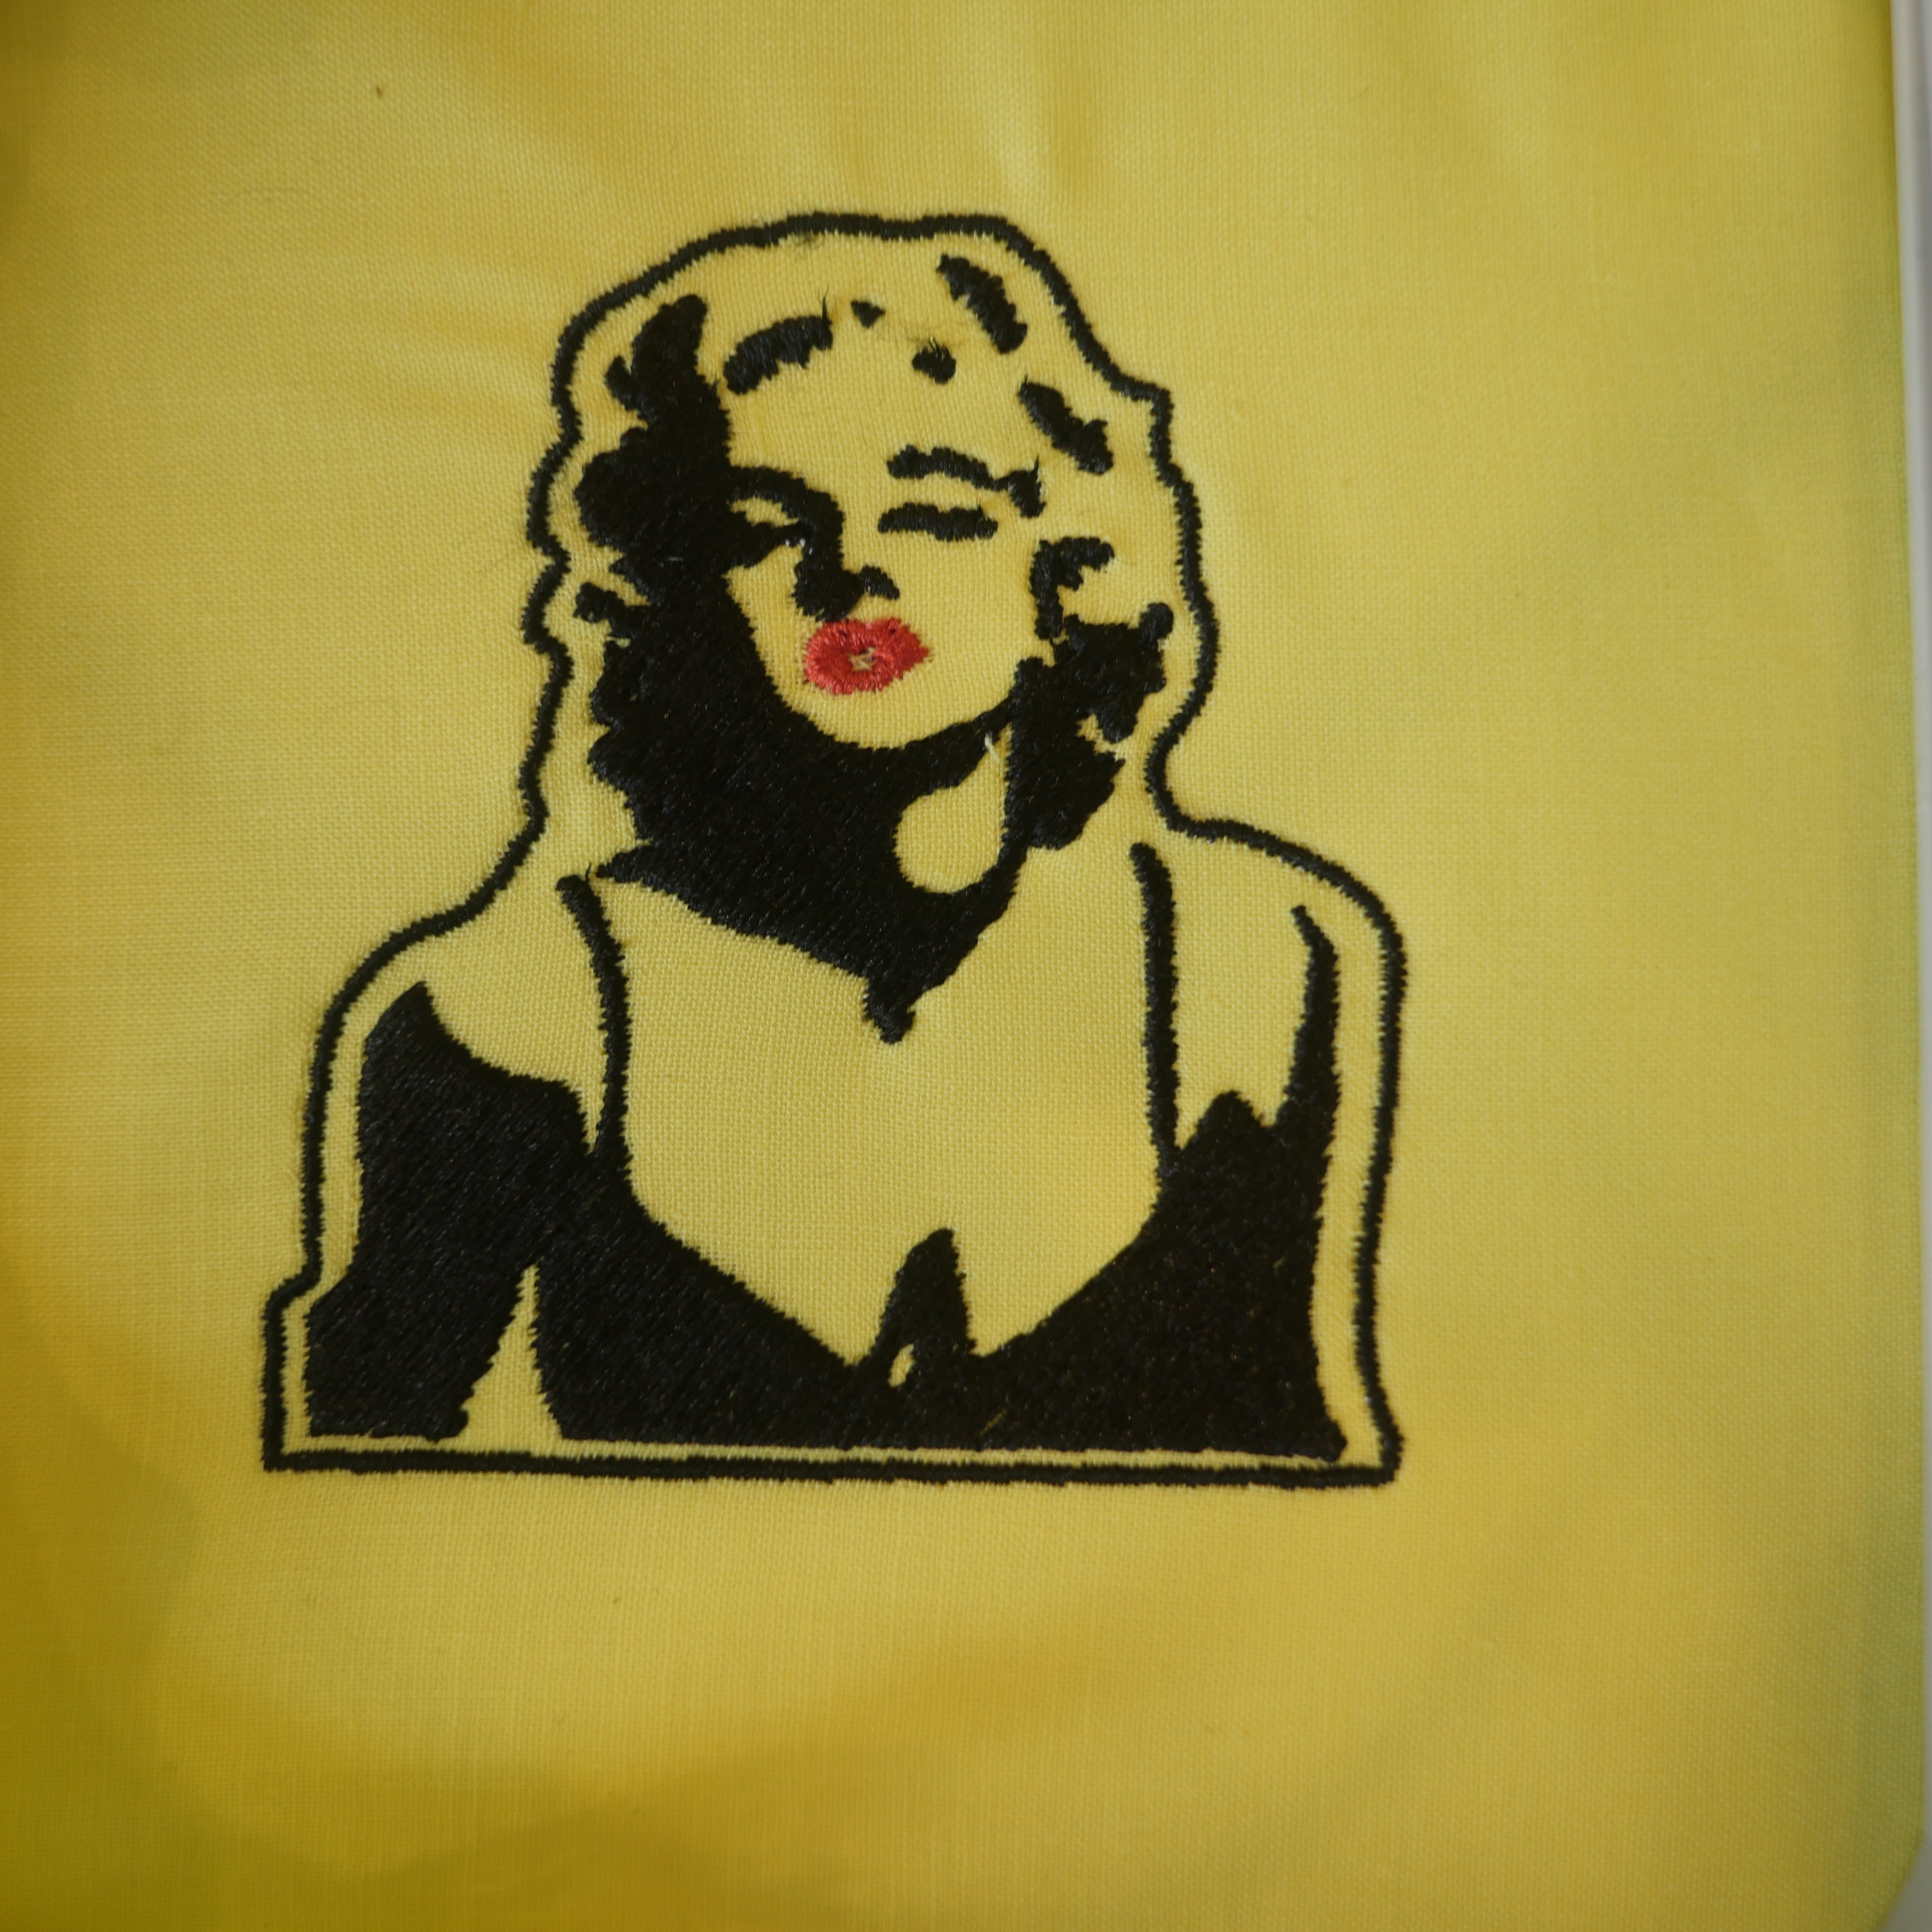 Marilyn Monroe Embroidery File